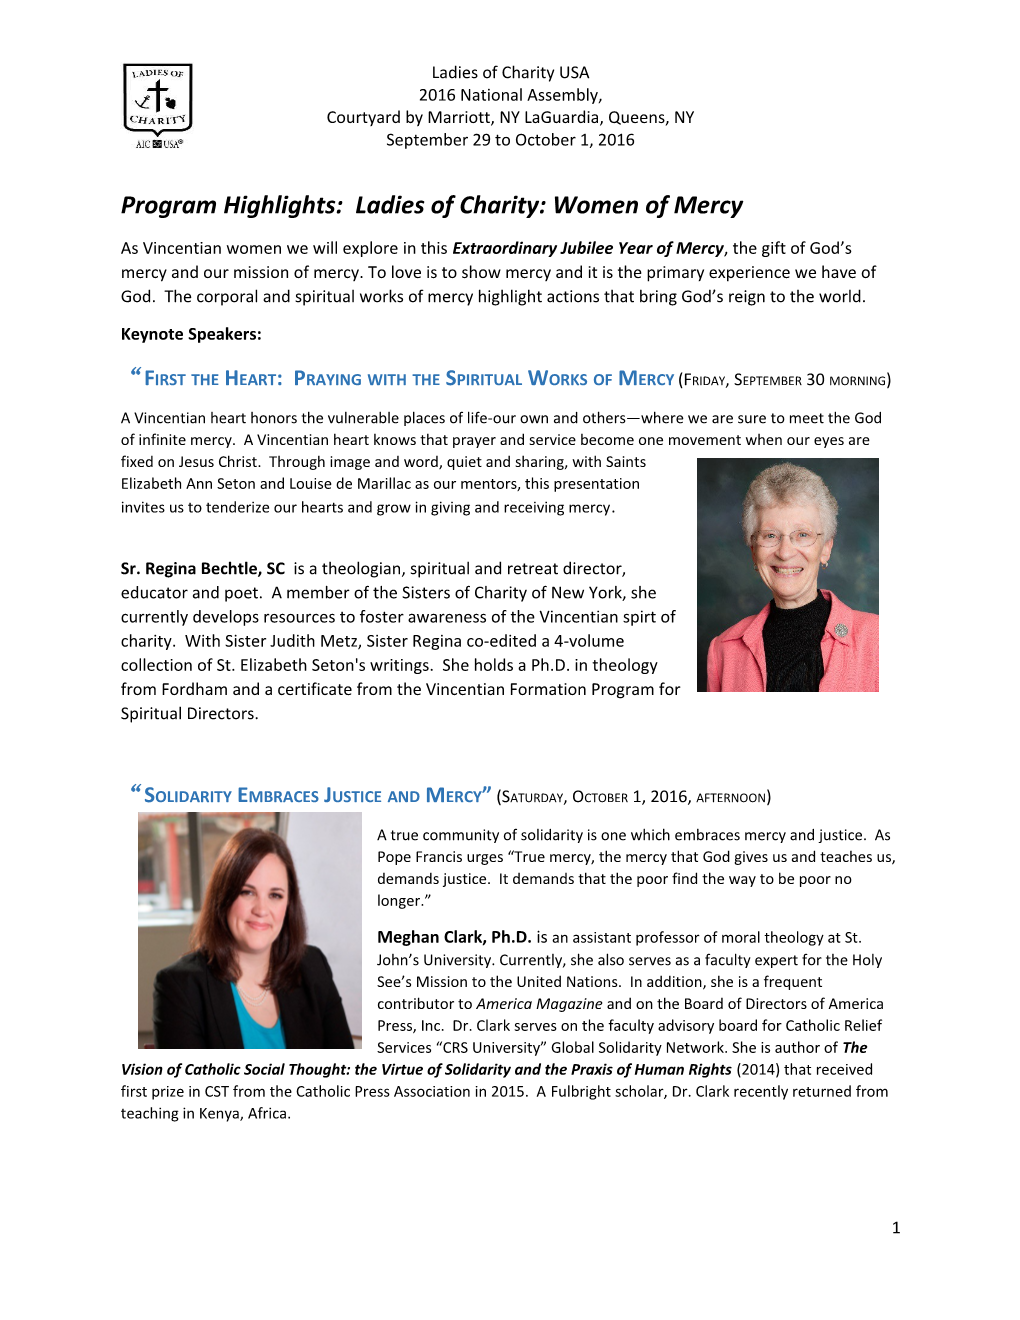 Program Highlights: Ladies of Charity: Women of Mercy